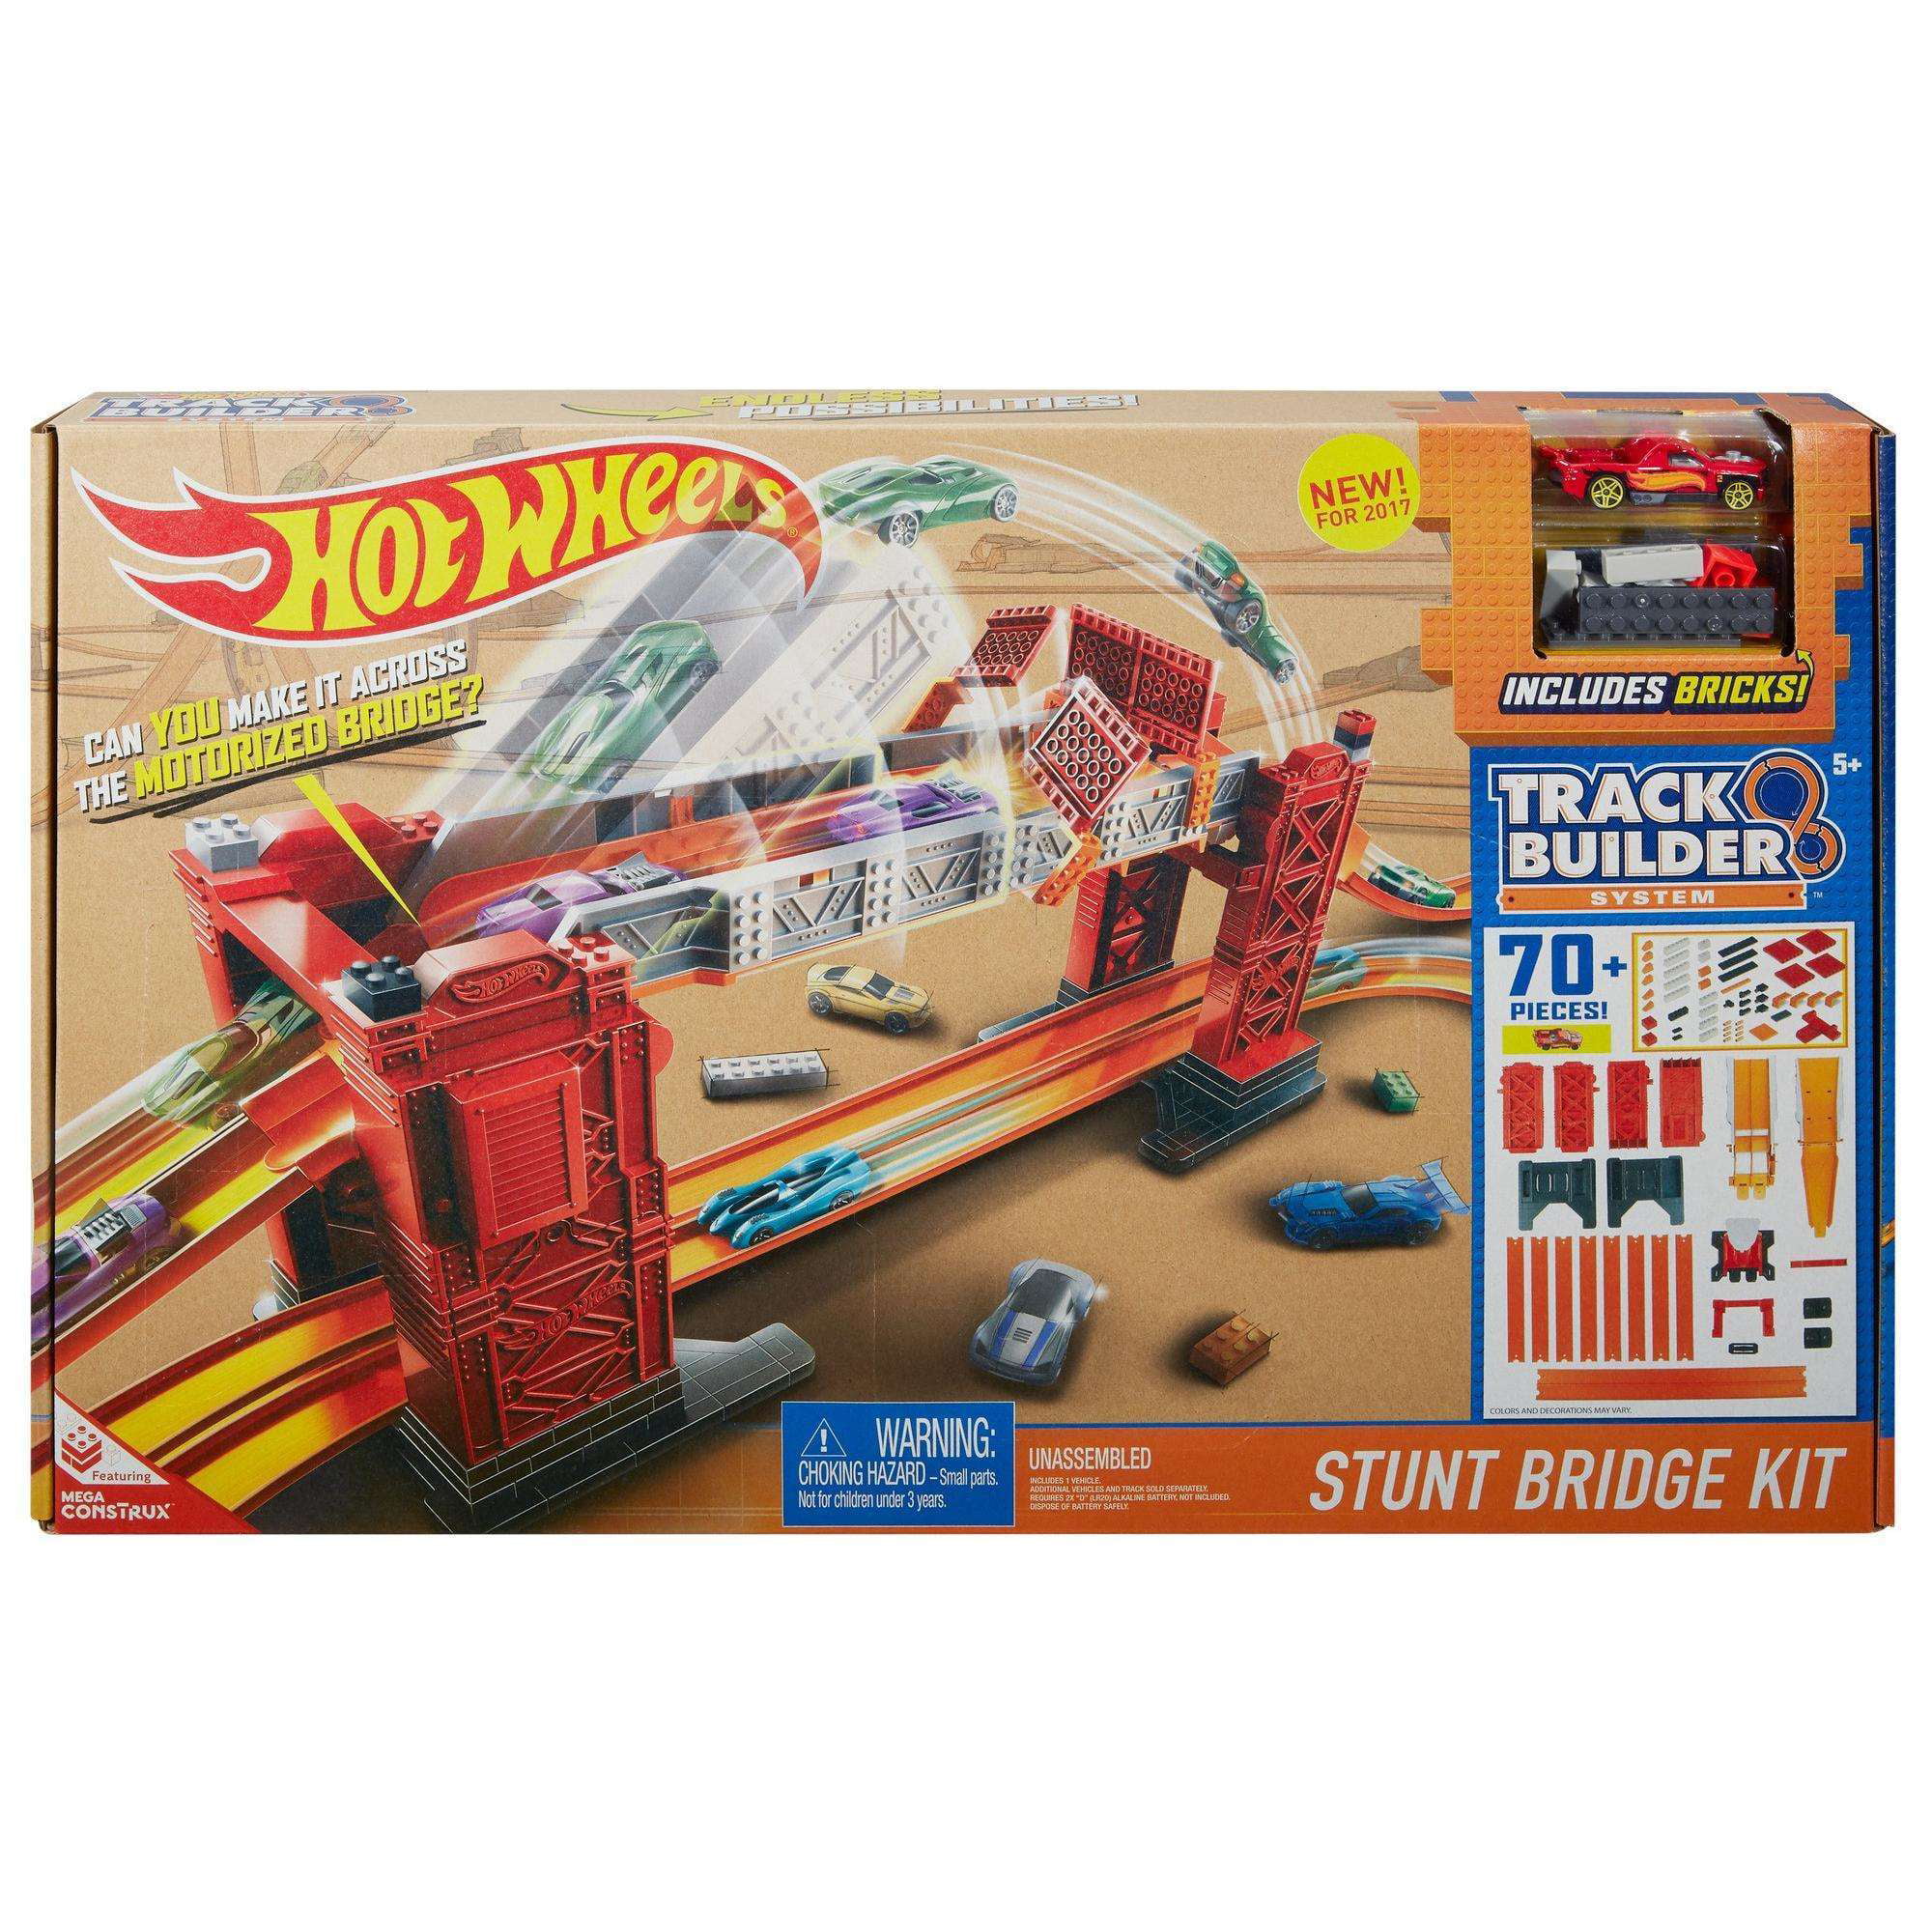 Hot Wheels Track Builder System Troll Bridge Challenge Playset fjj95  NEW 